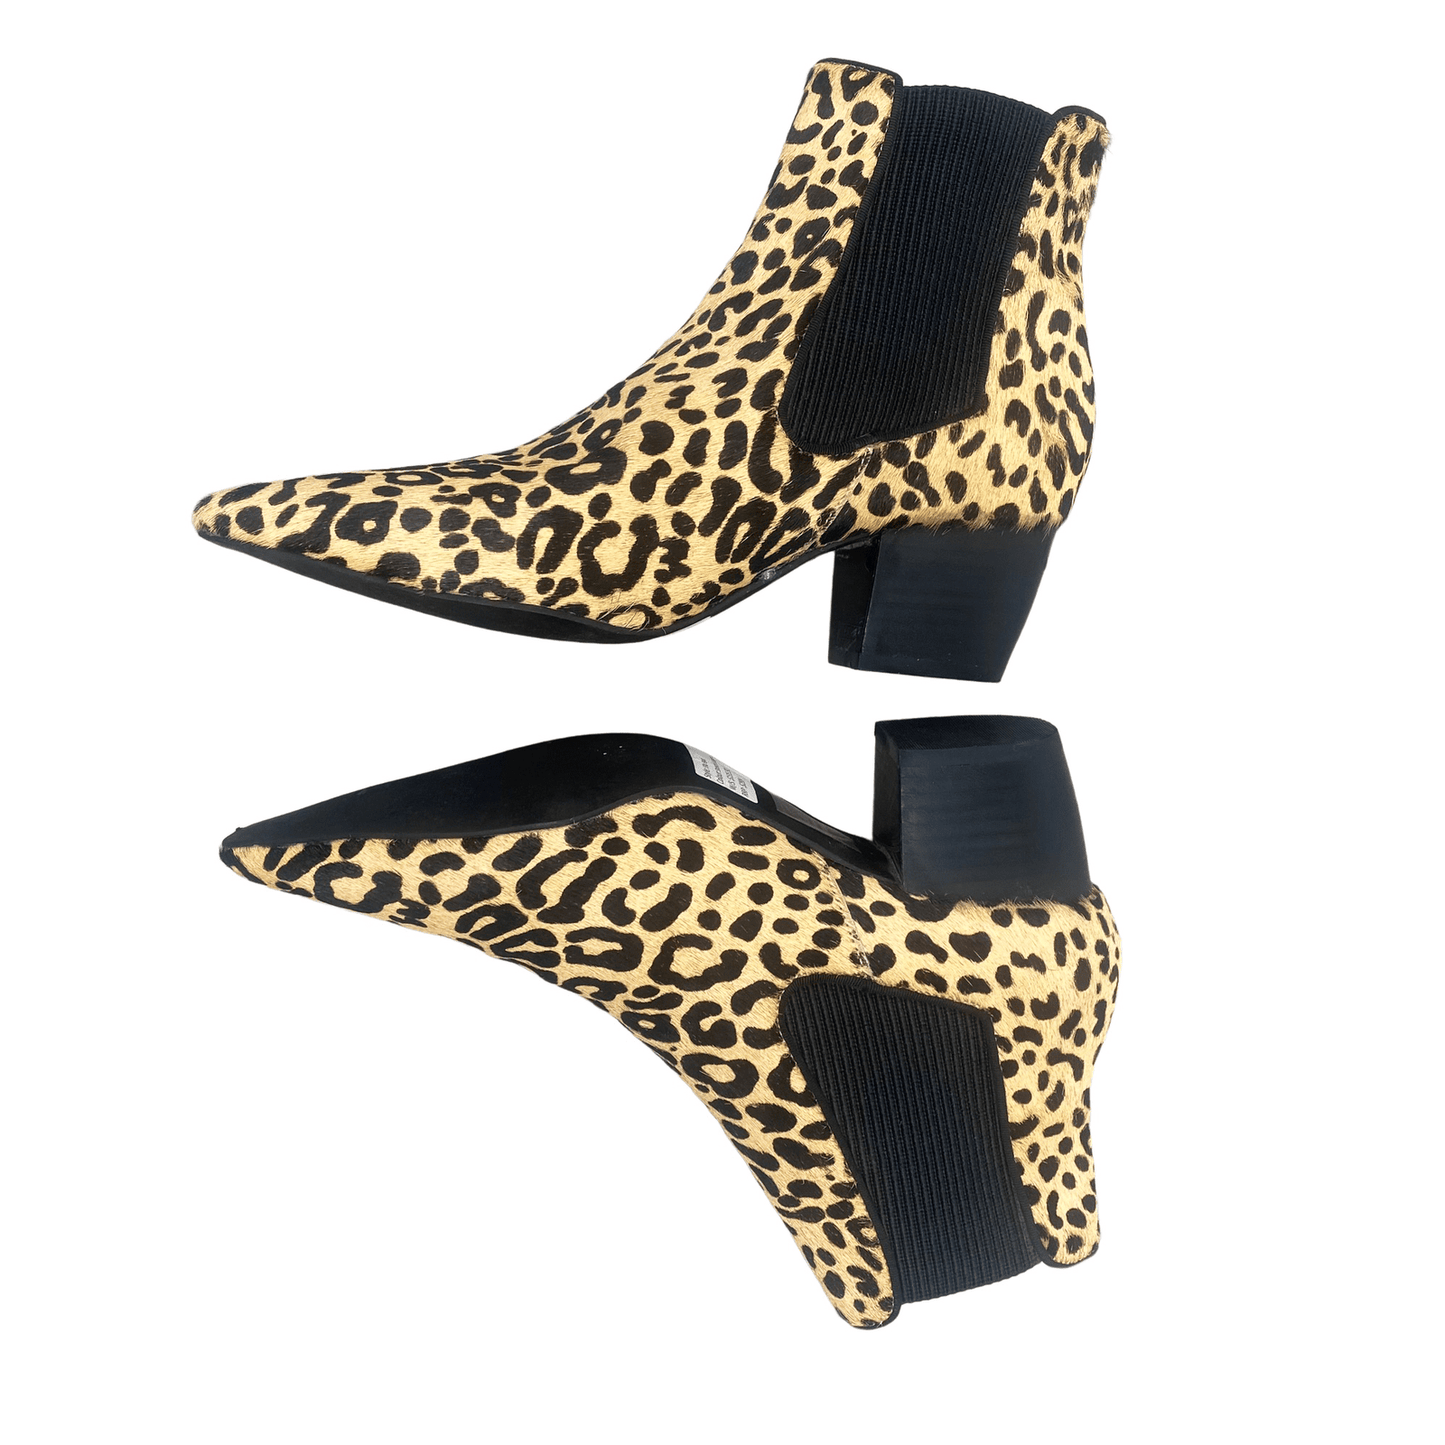 Sol Sana Ella Boot stretch leopard boot | size 7 or EU 38 - as new RRP $299